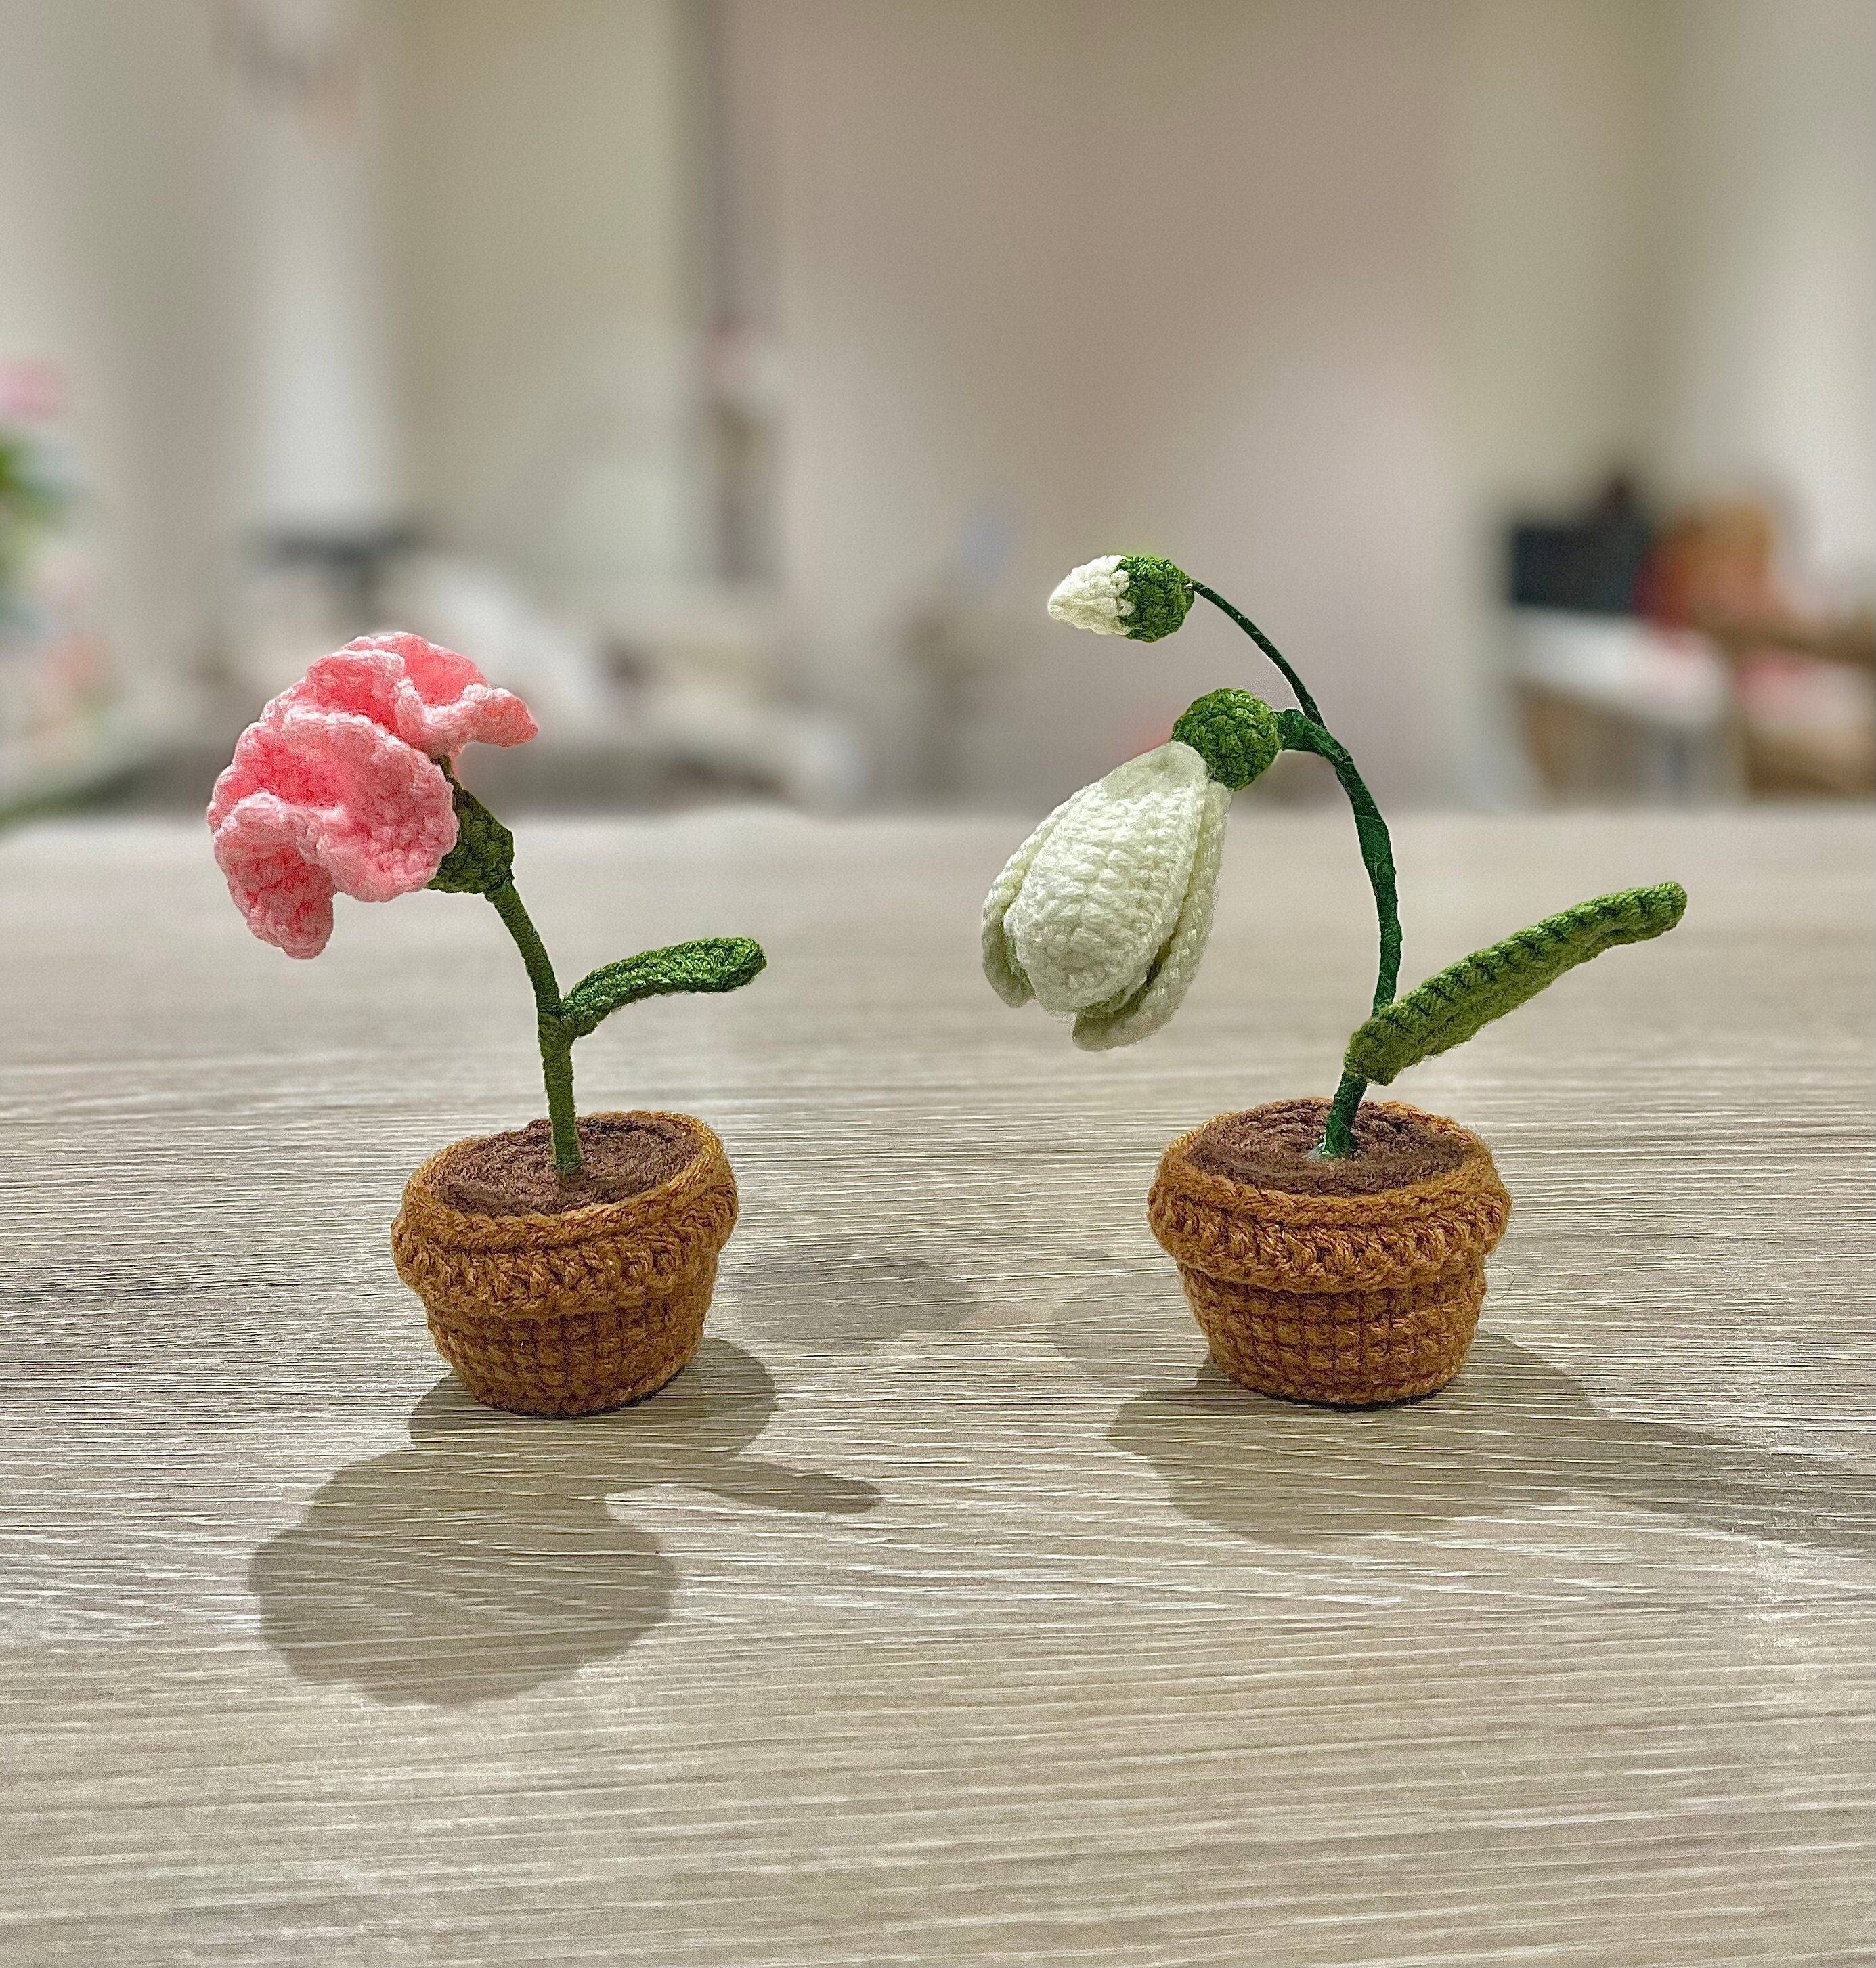 Miniature SNOWDROP in a pot, Tiny crochet white flower, Snow - Inspire  Uplift, Fake Wild Flowers 